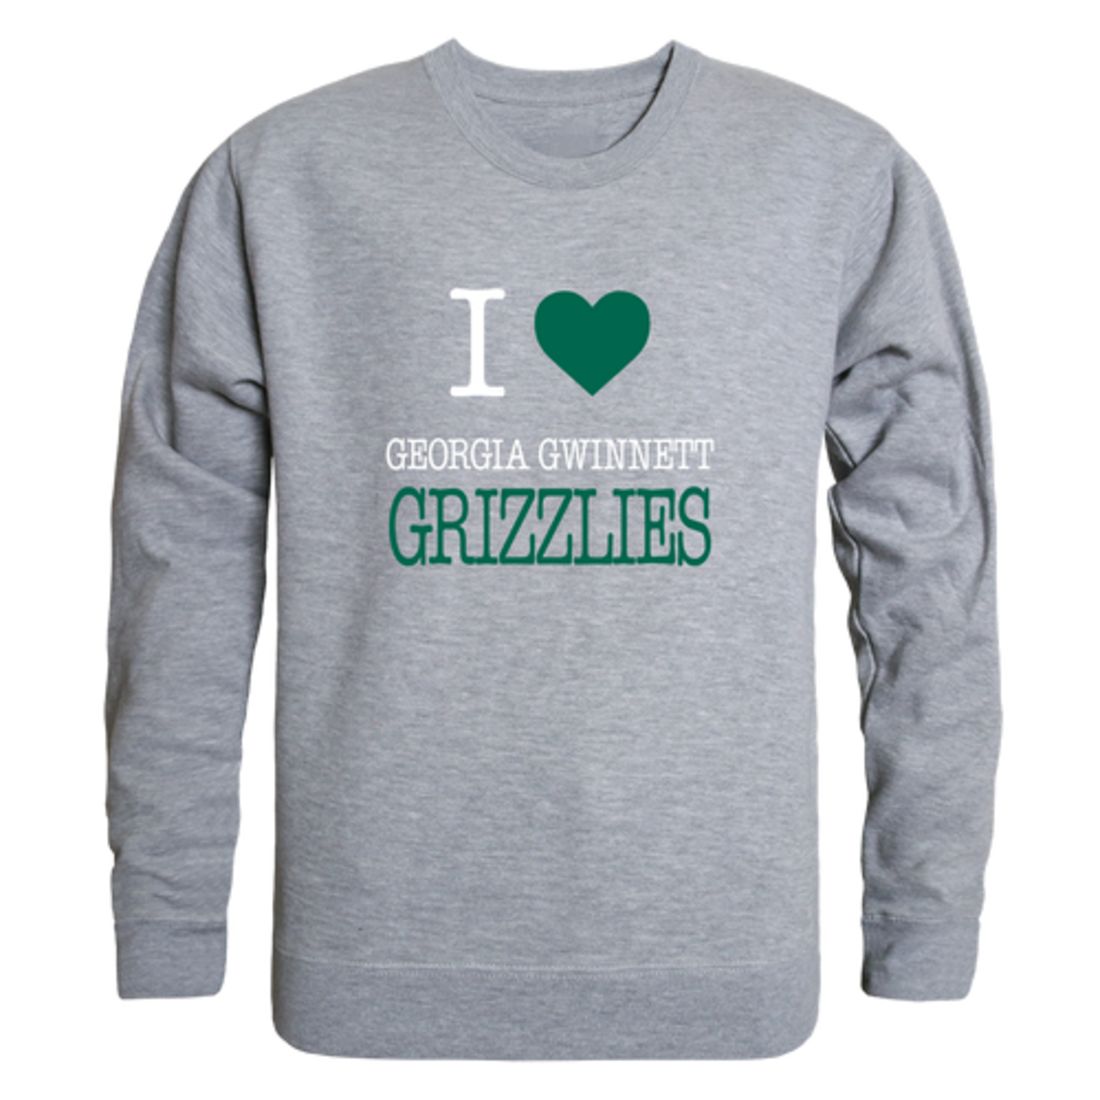 I-Love-Georgia-Gwinnett-College-Grizzlies-Fleece-Crewneck-Pullover-Sweatshirt